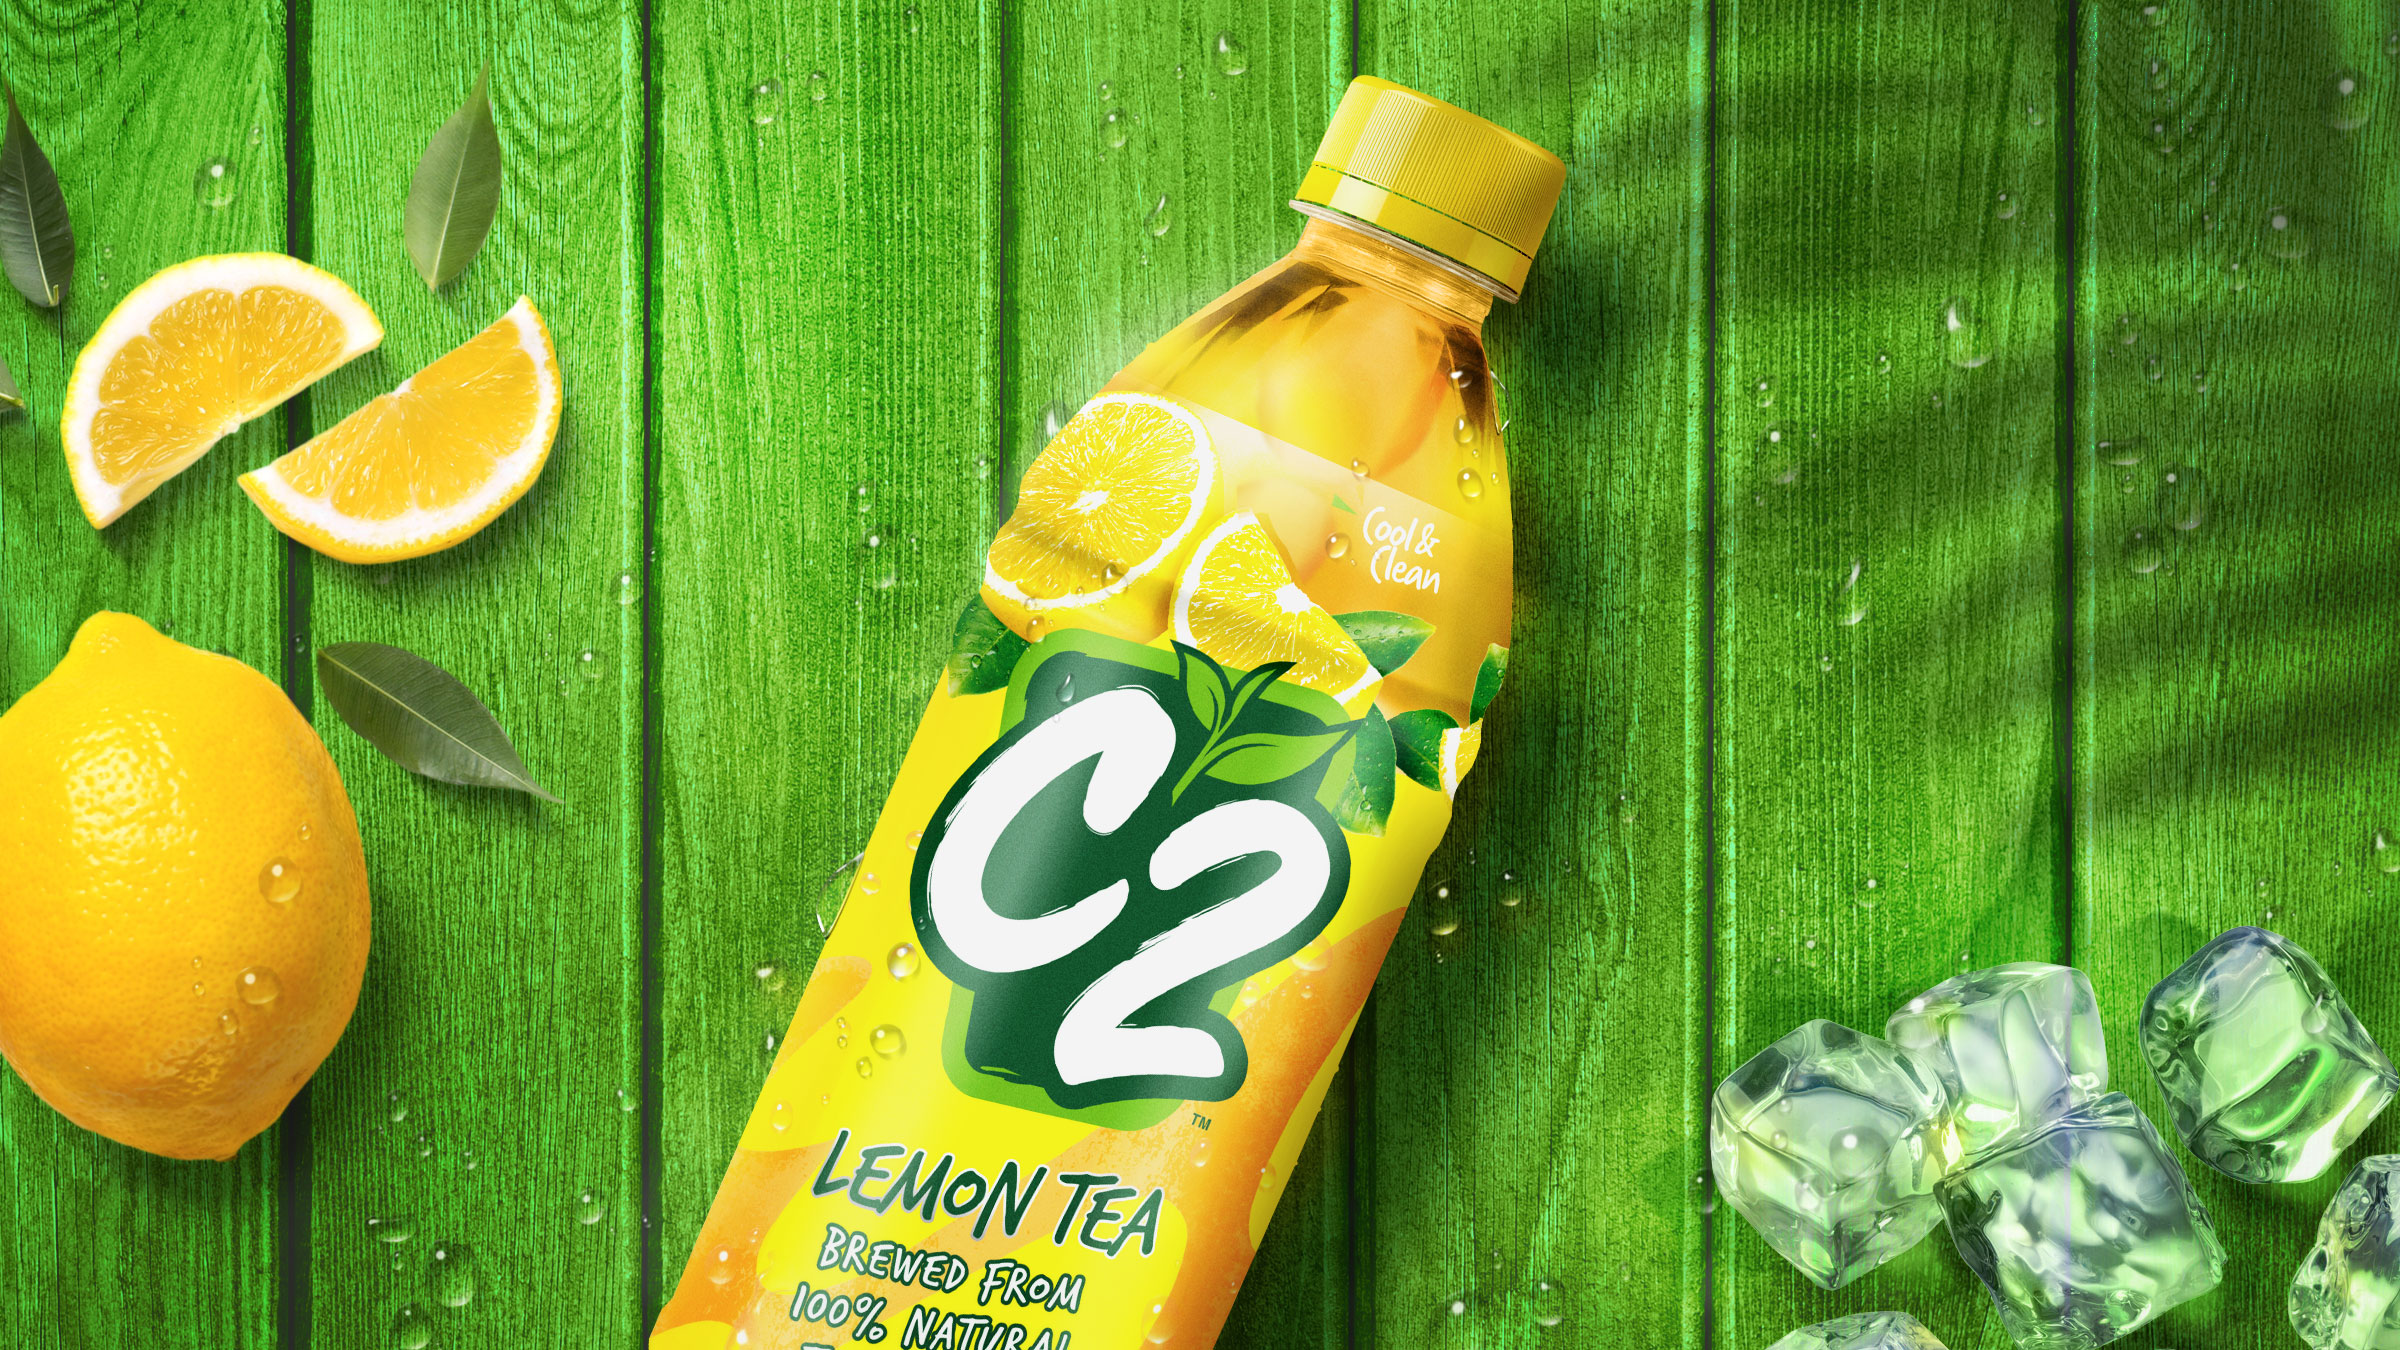 C2 Ice Tea Packaging Design